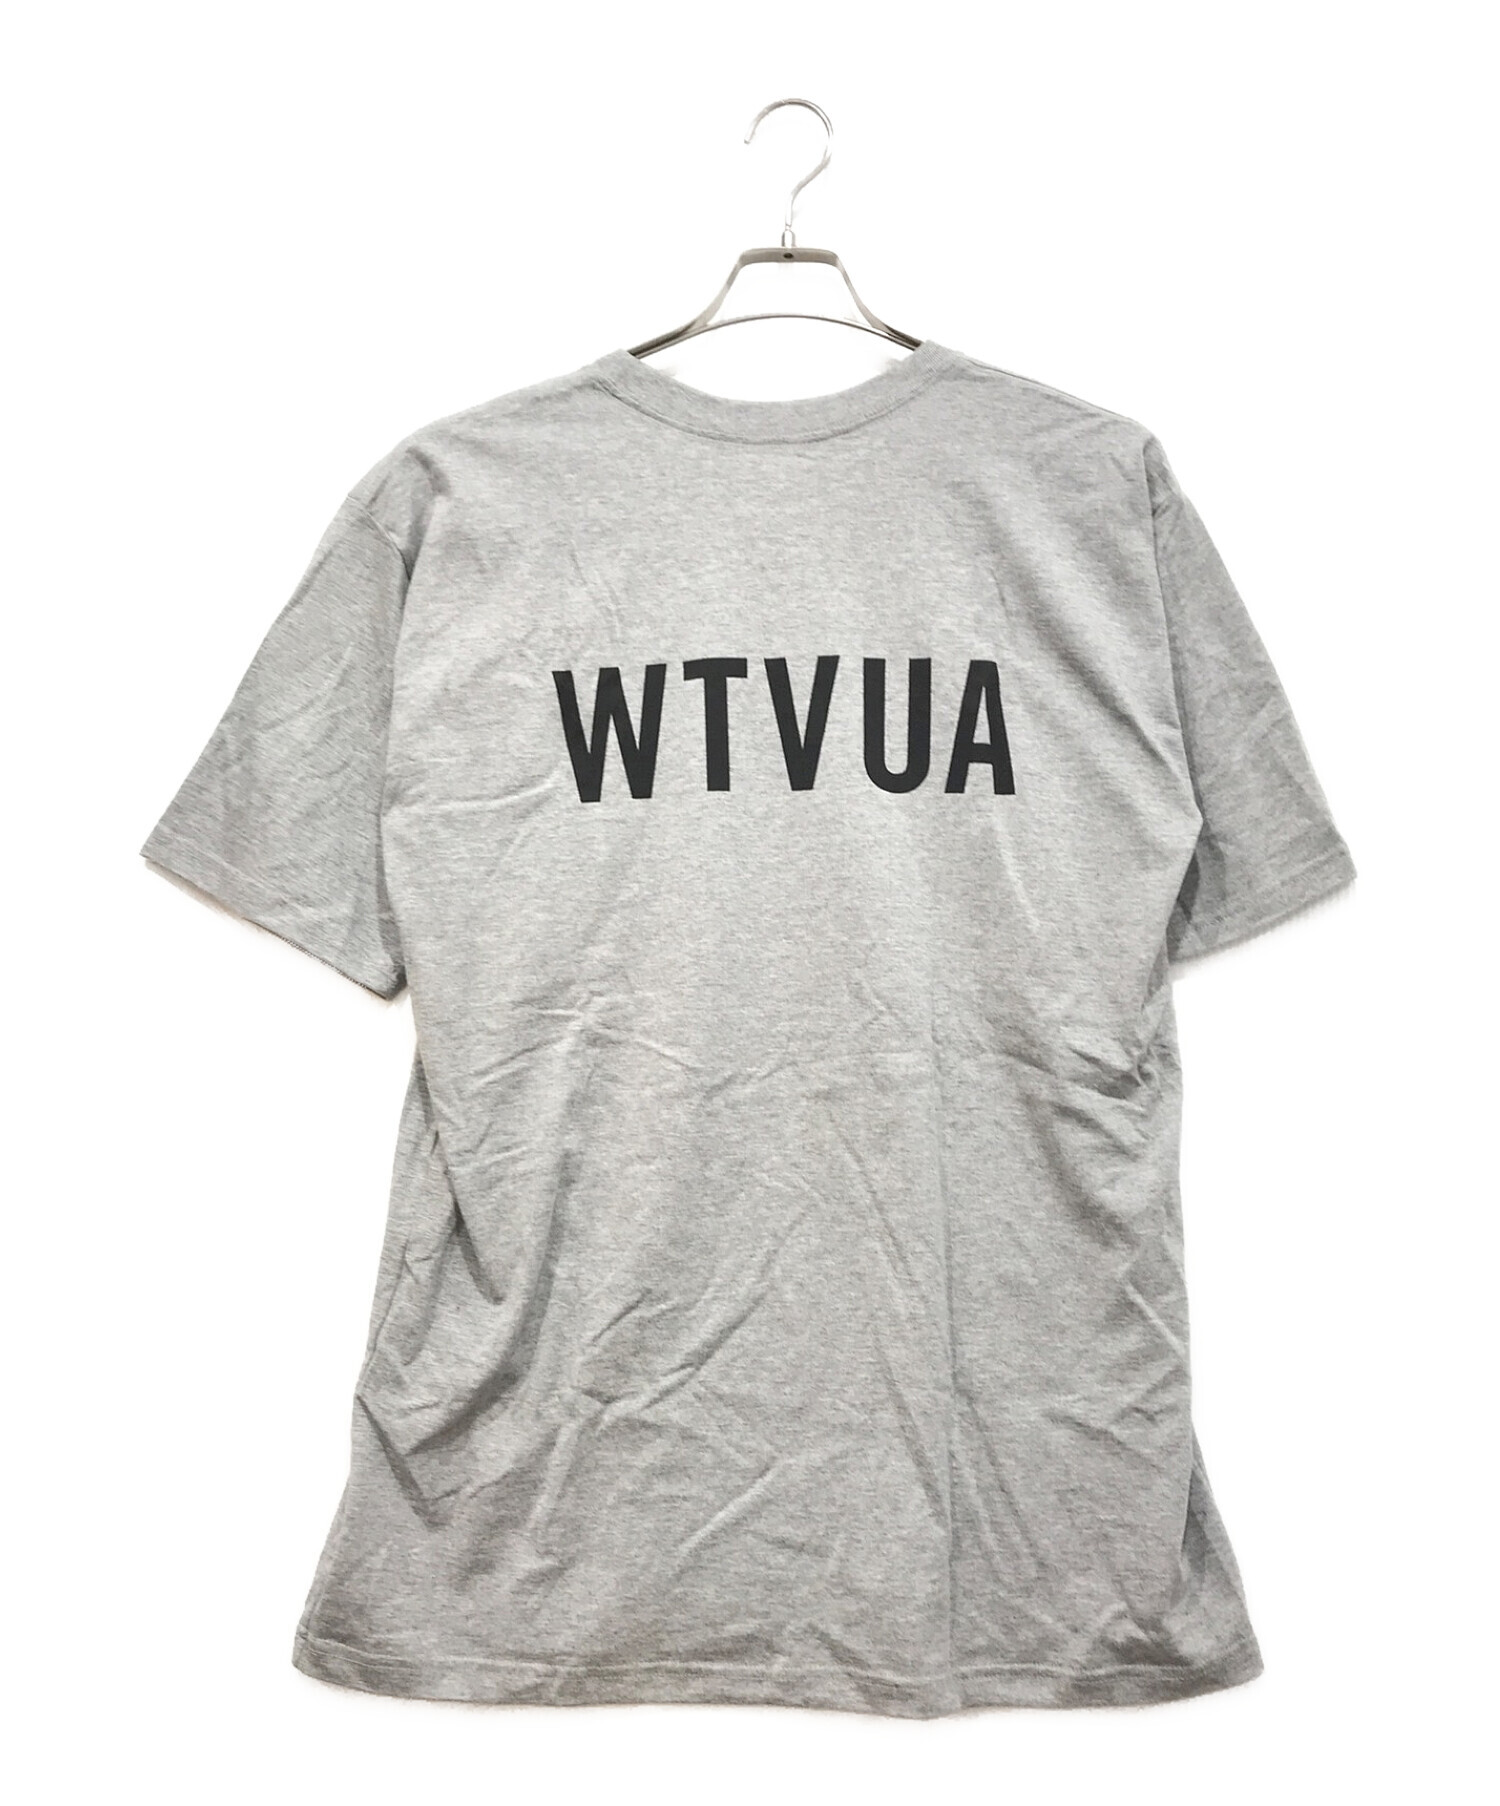 wtaps シャツ WTVUA gray グレー Lサイズ Tシャツ